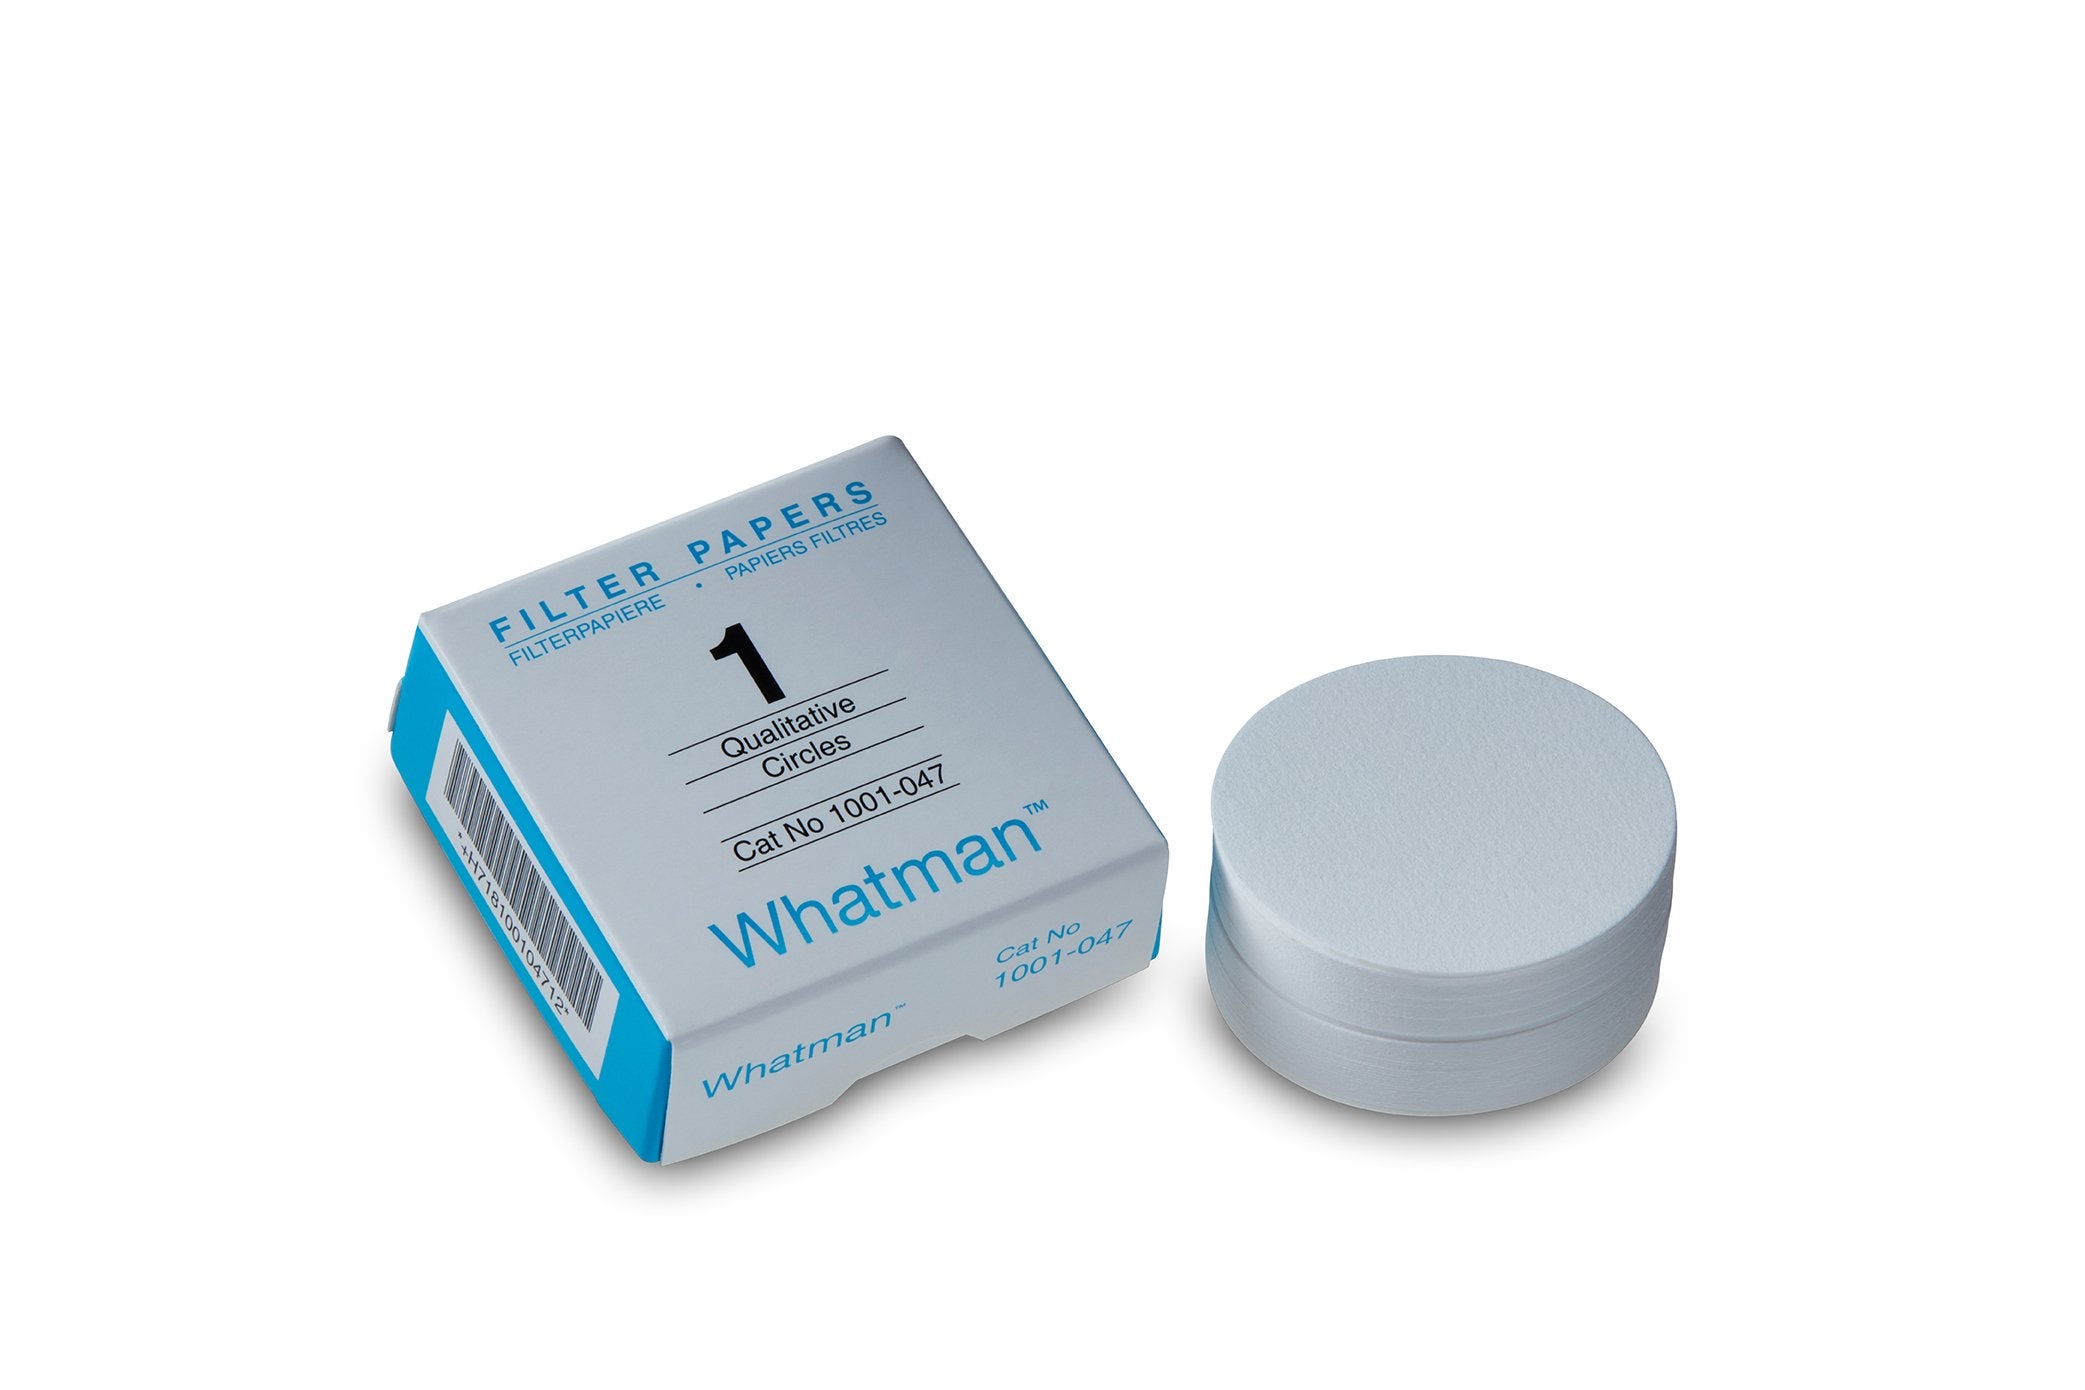 Whatman 3001-653 Cellulose Chromatography Paper, Grade 1 Chr Roll, 5.0cm x 100m, 1/pk